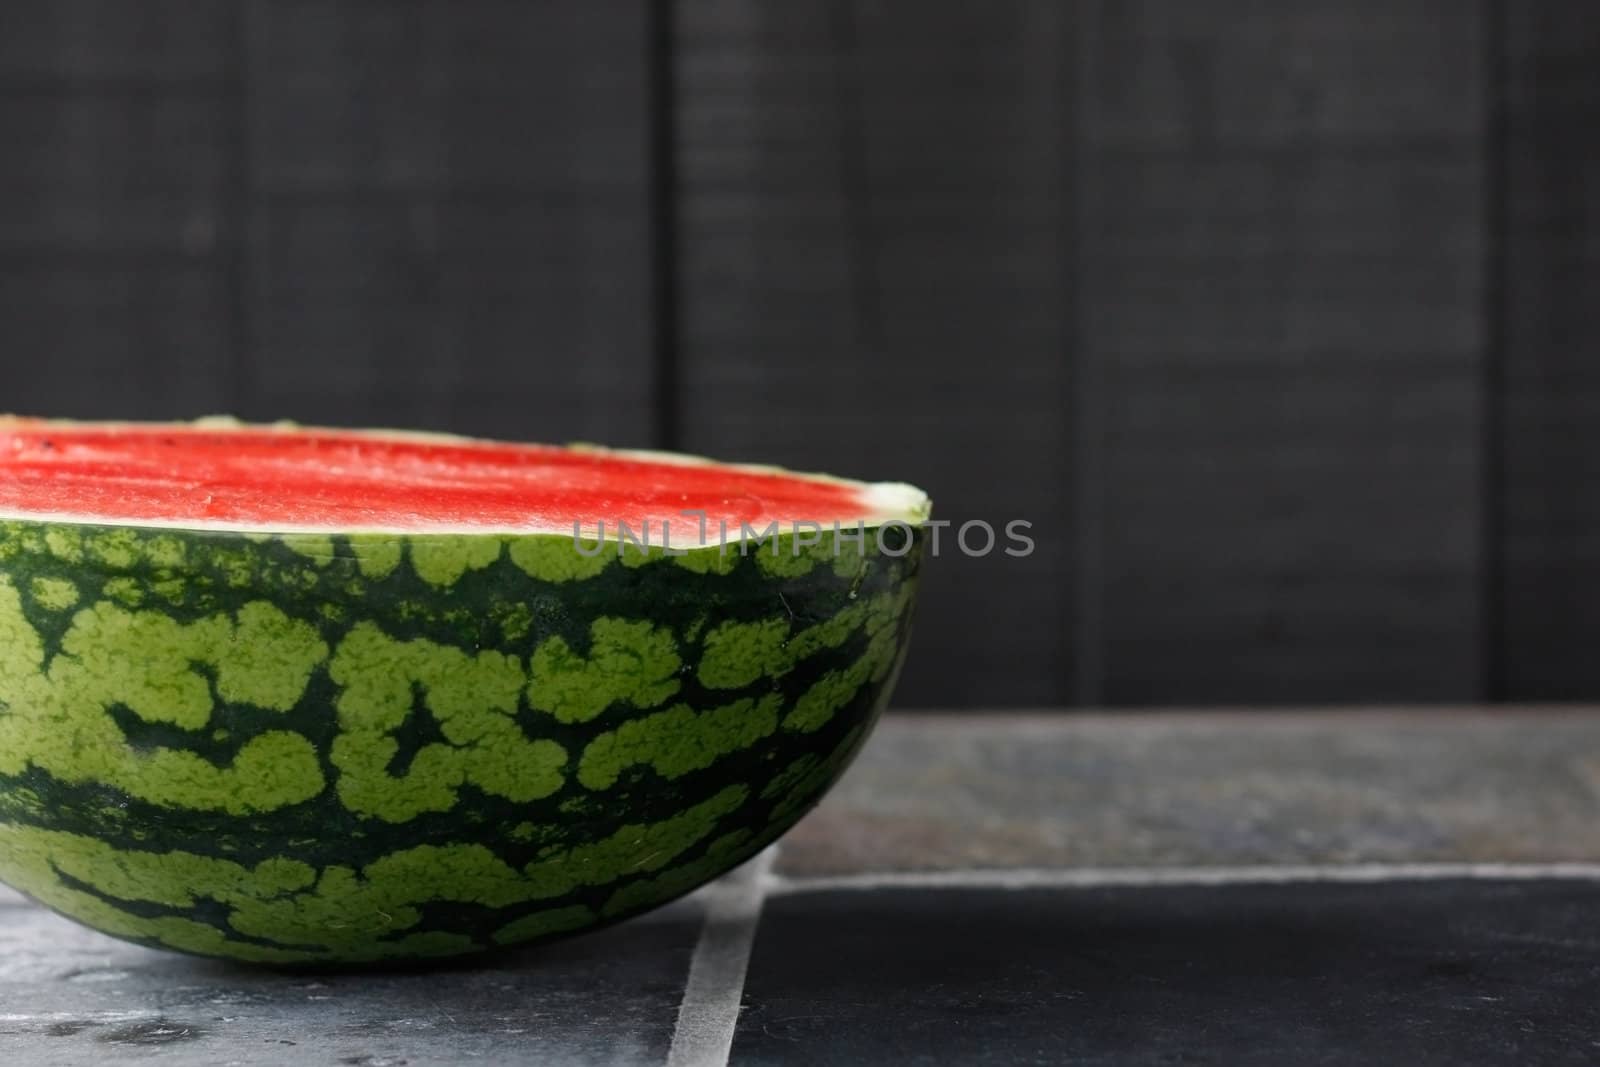 Water melon by leeser